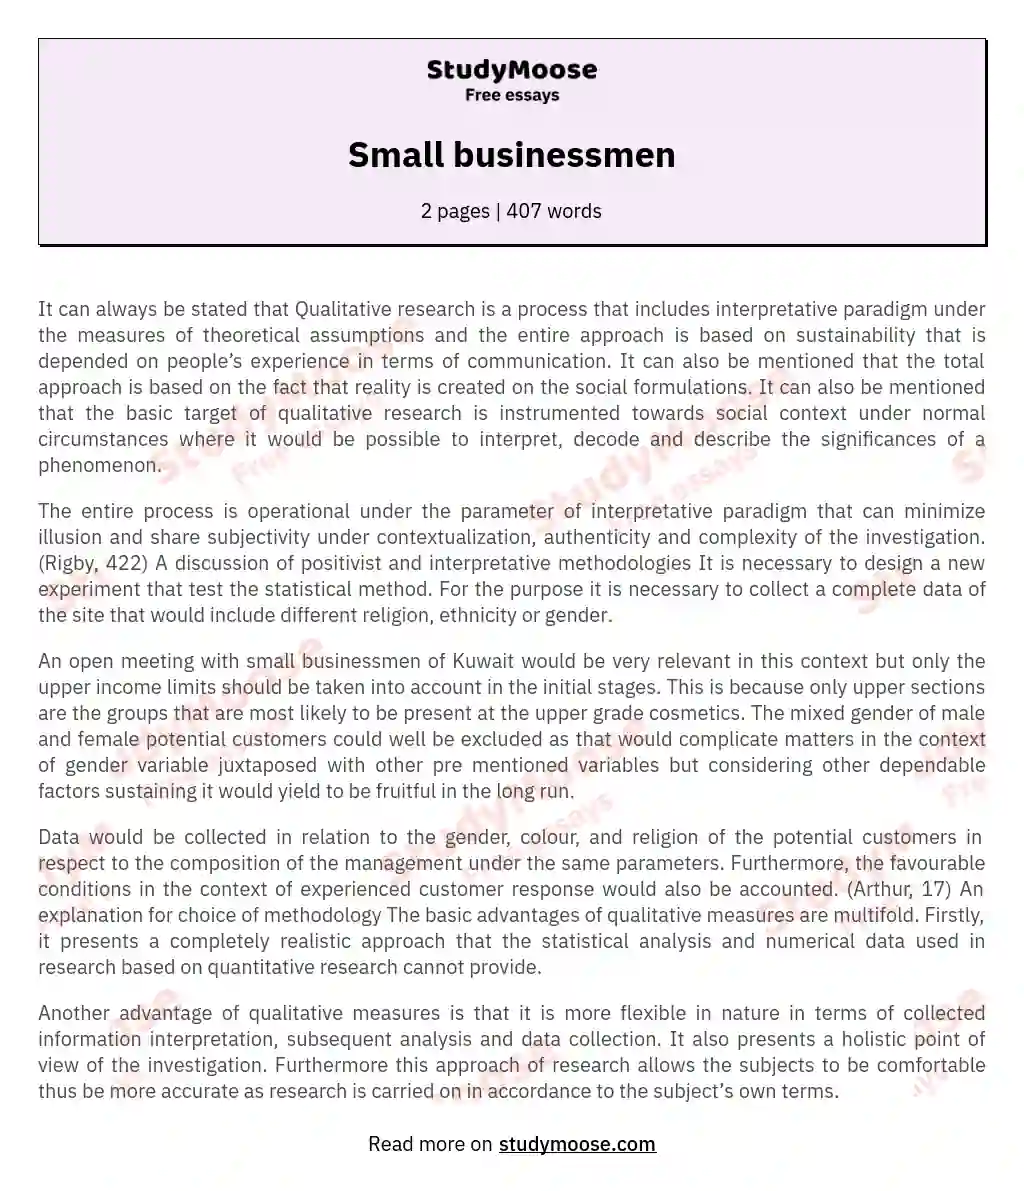 Small businessmen essay